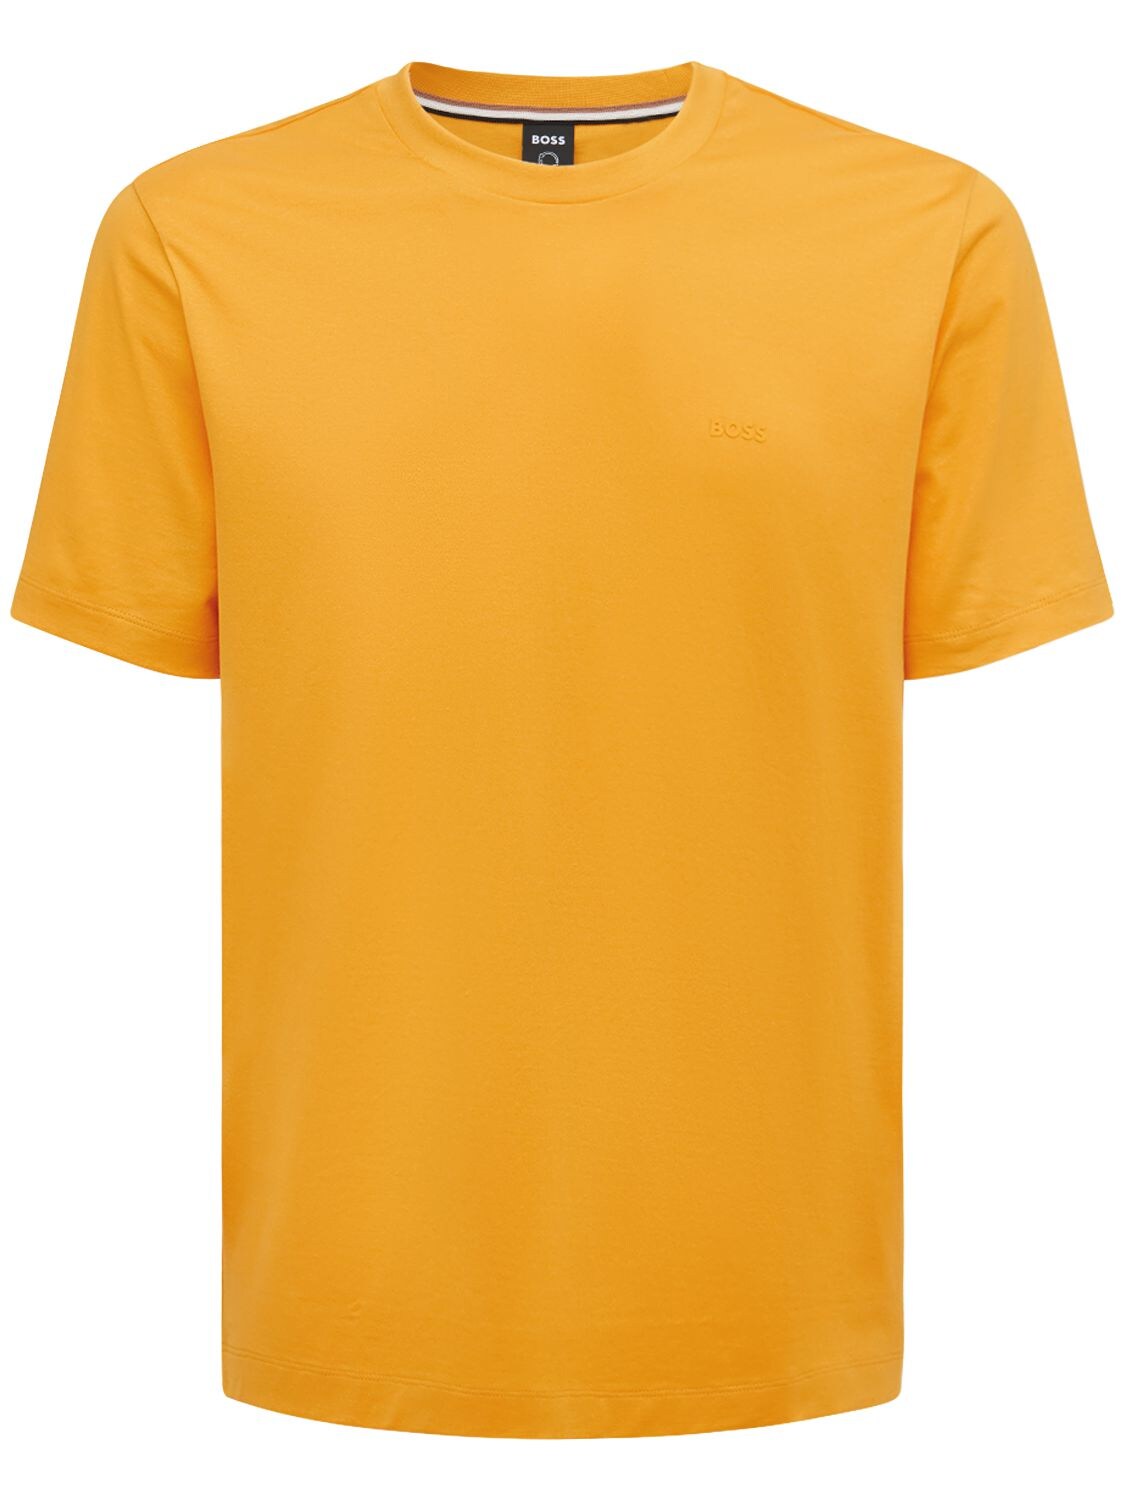 T-shirt Thompson In Cotone - BOSS - Modalova